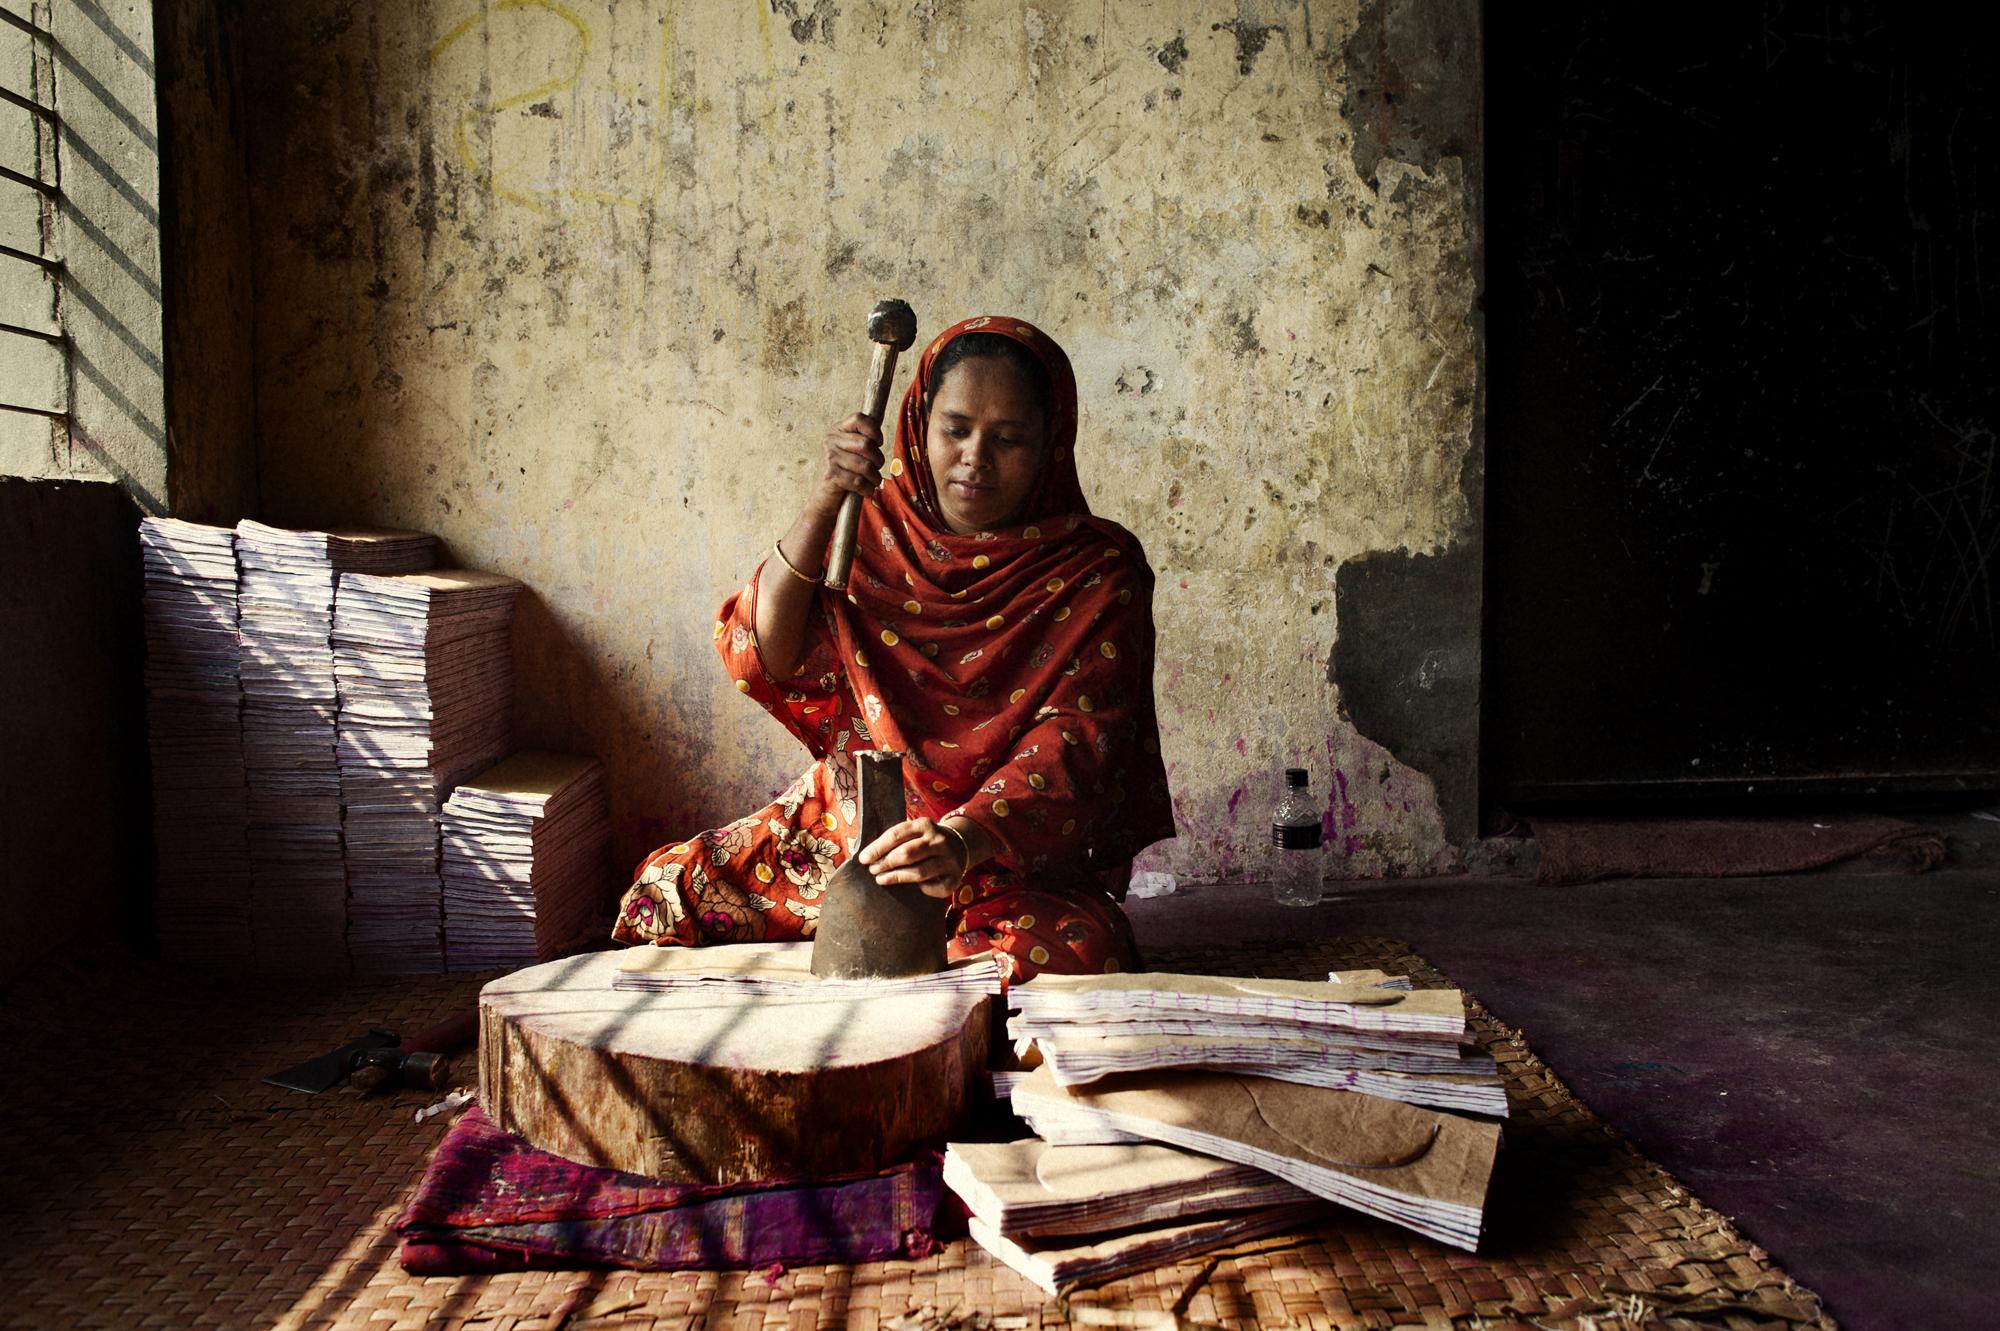 Microcredit / Bangladesh - Bangladesh, Dhaka, Utterkhan.
January 2012
Mabia is...